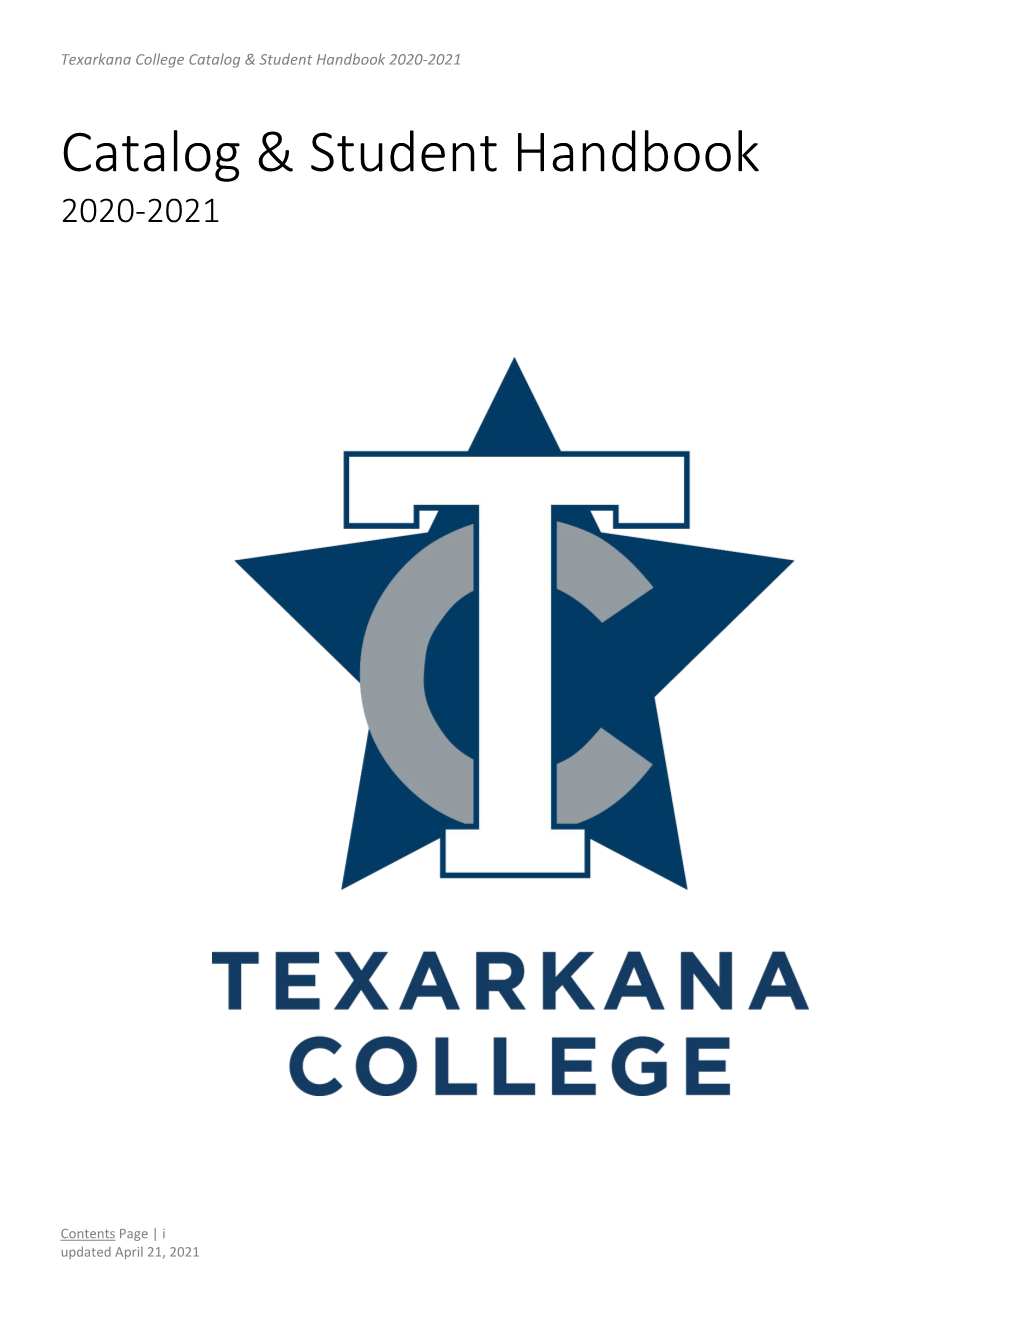 2020 Catalog and Student Handbook